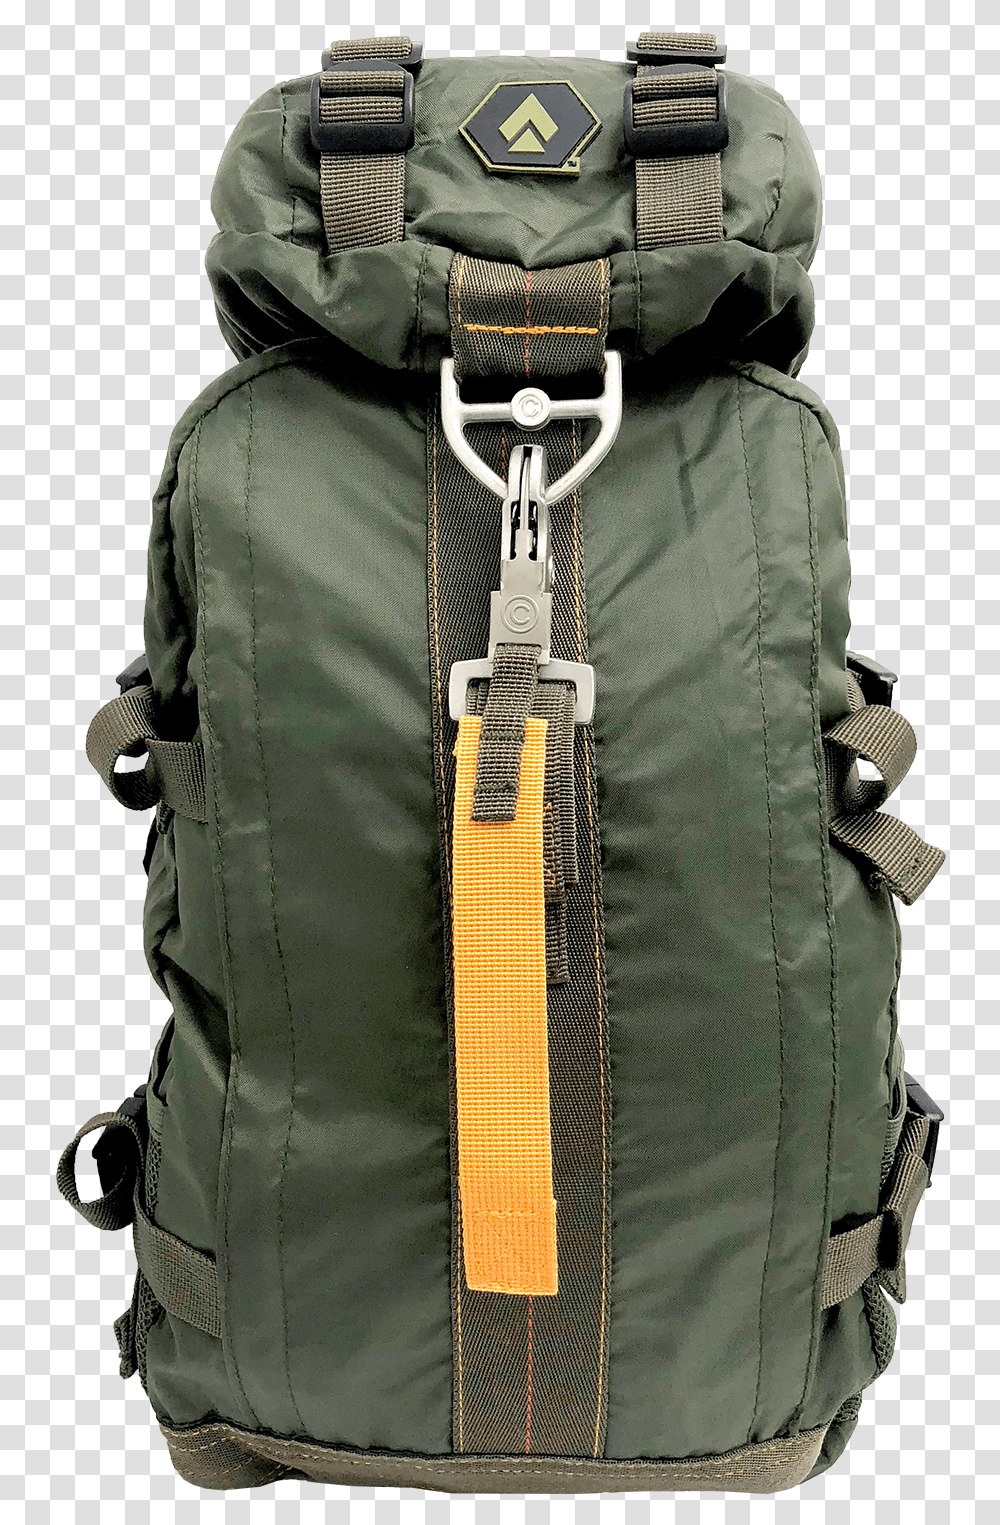 Opsgear Parachute BackpackClass Parachute In A Backpack, Vest, Apparel, Zipper Transparent Png